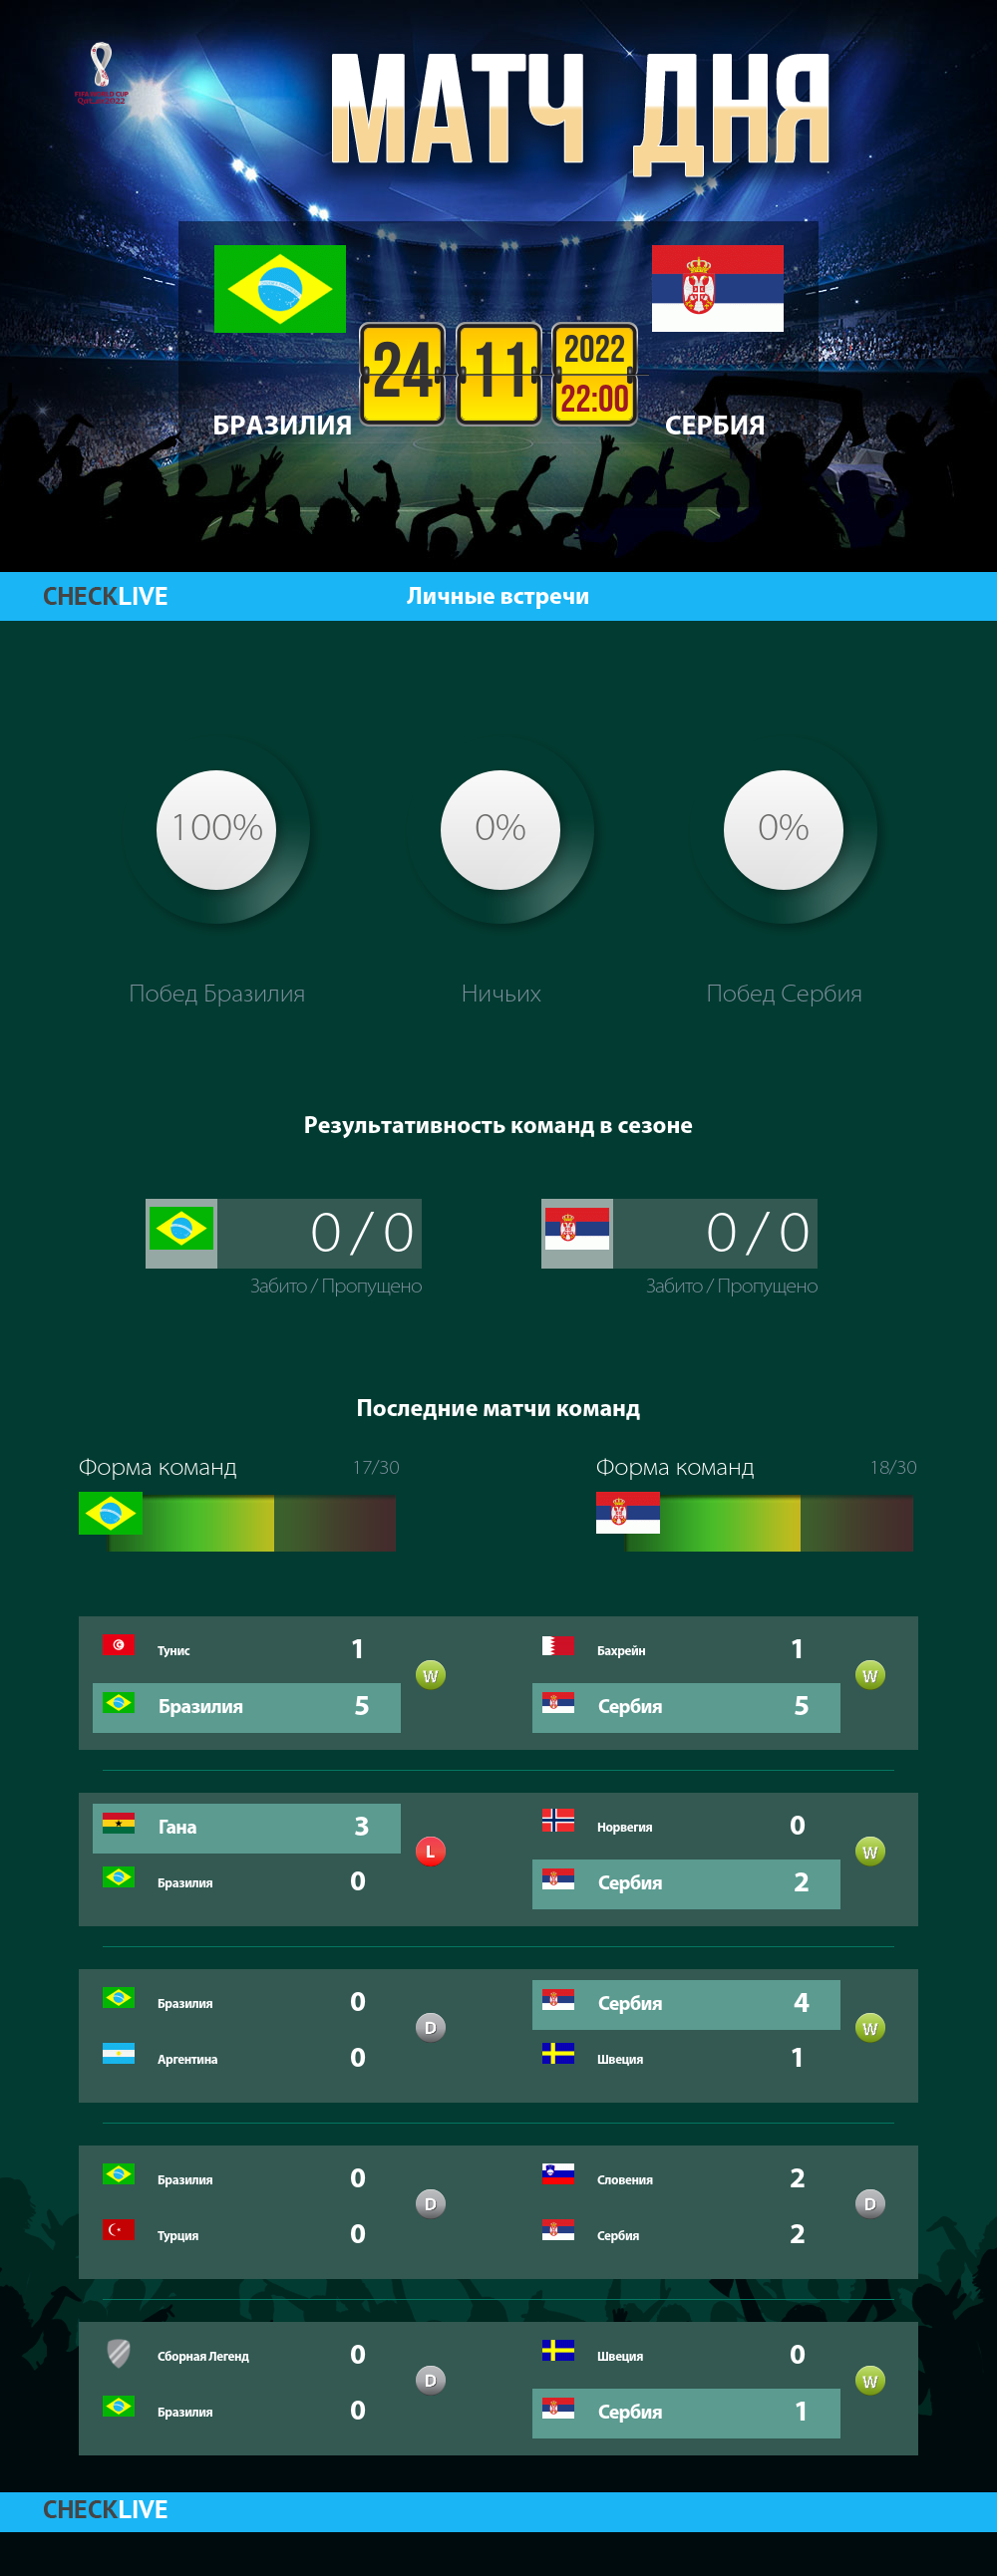 Инфографика Бразилия и Сербия матч дня 24.11.2022